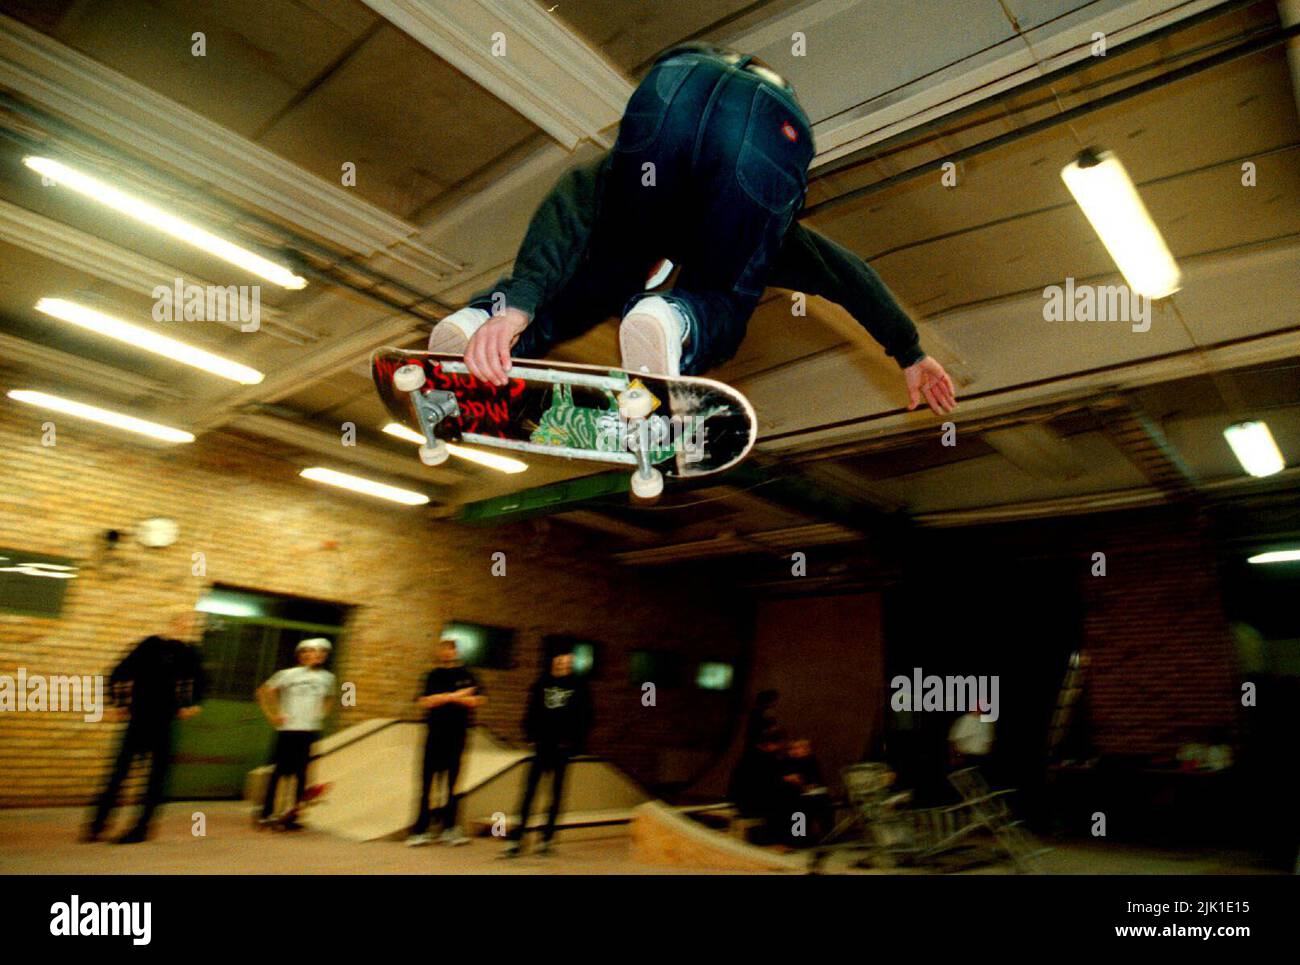 Un skateboarder en una sala de skate. Foto de stock